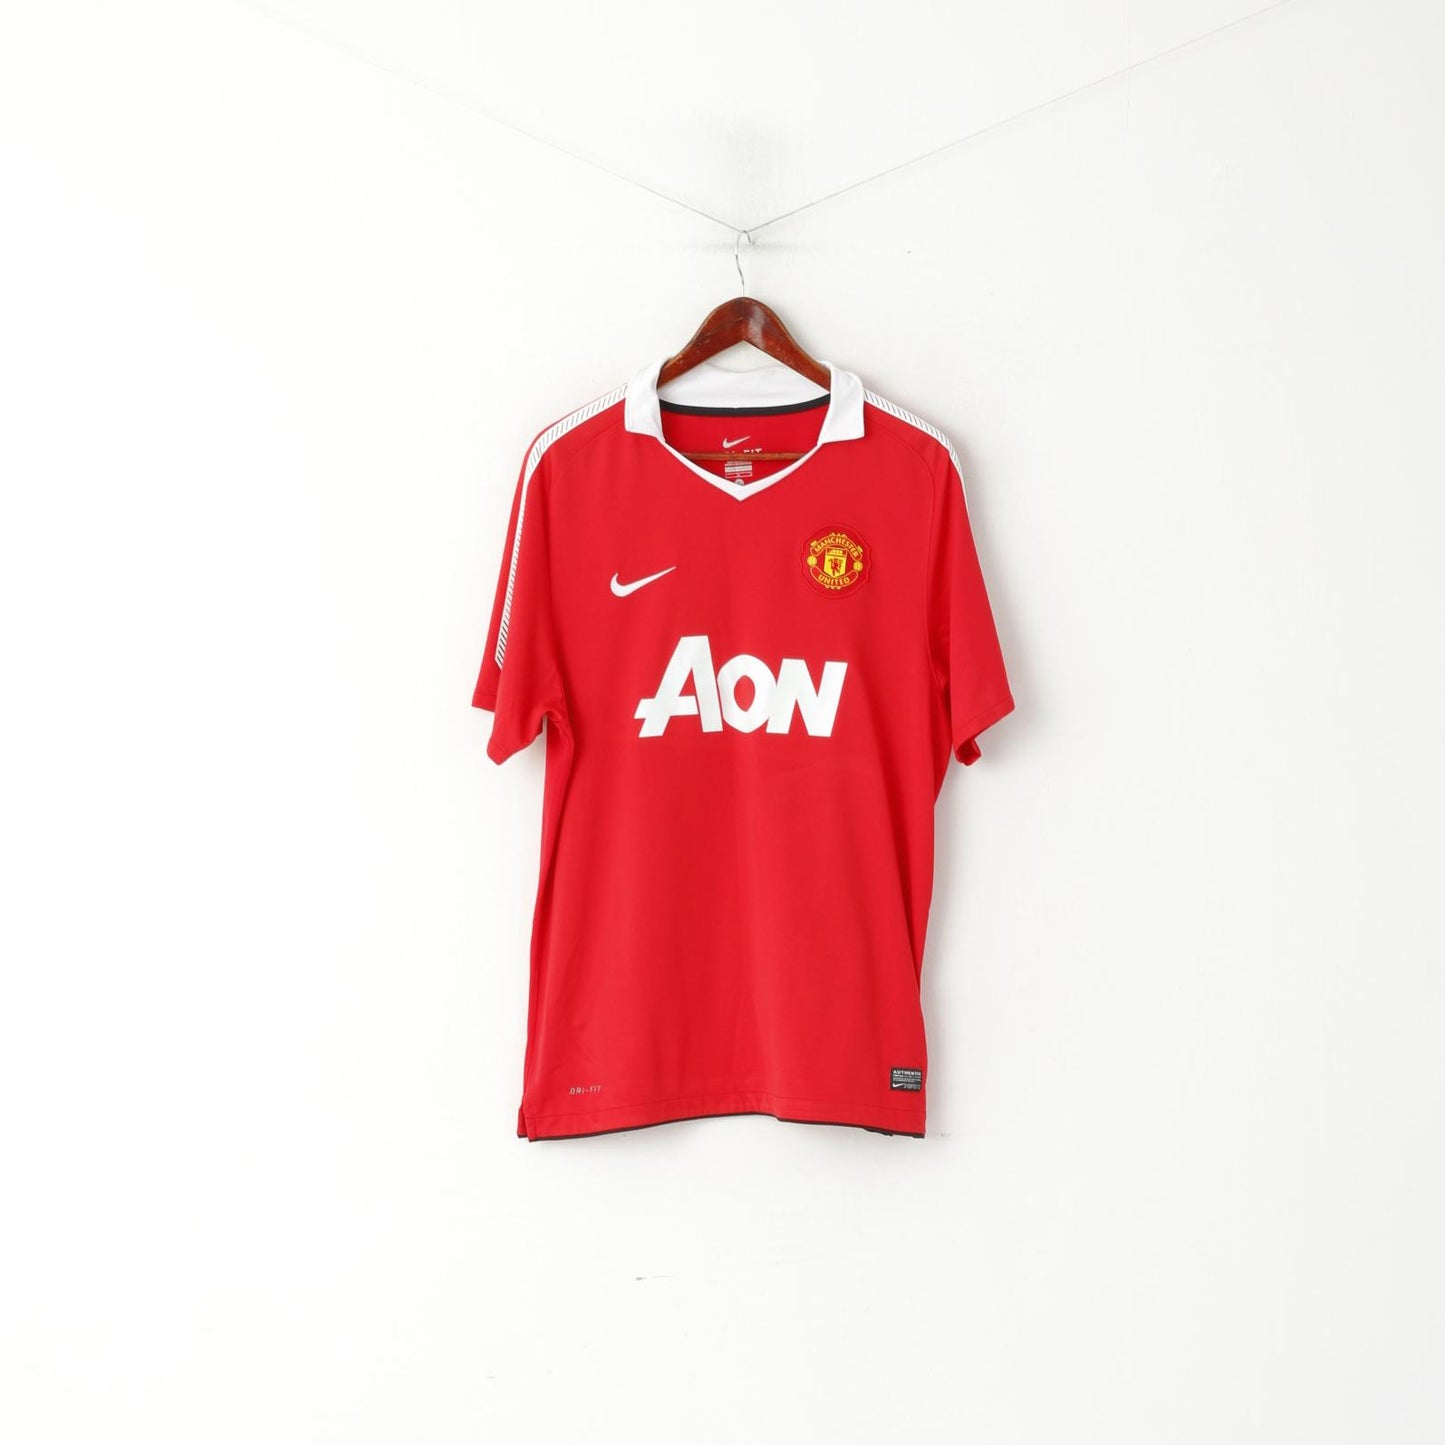 Nike Men L Shirt Red Manchester United Football Club MUFC Jersey Sport Top